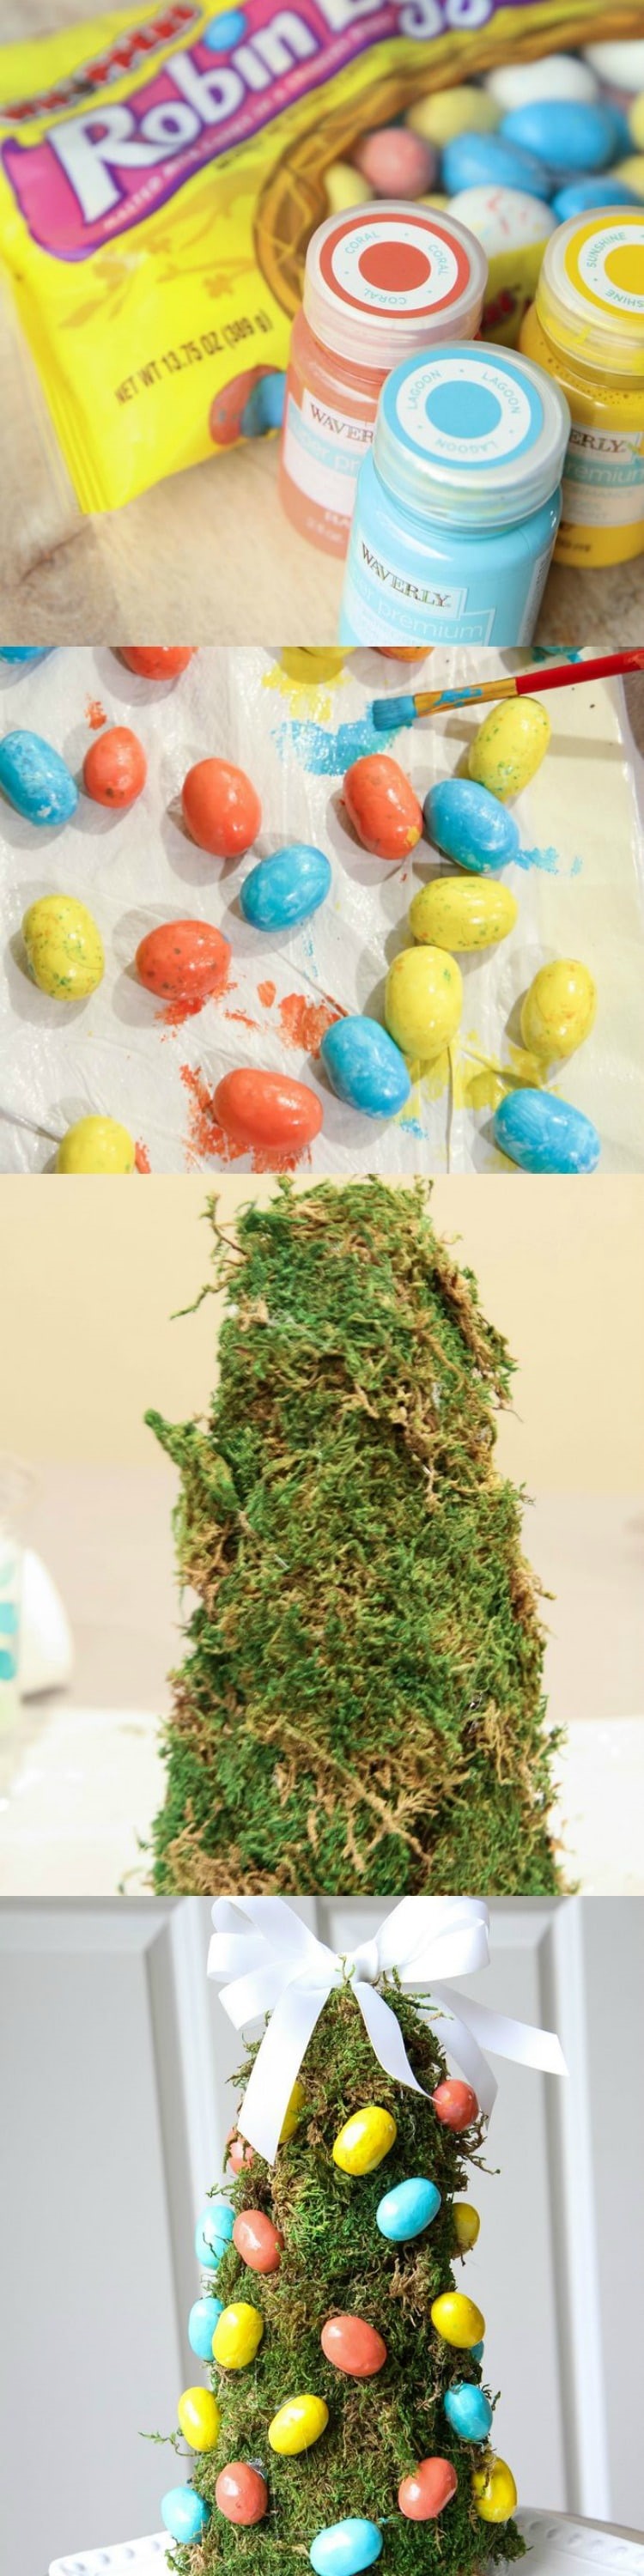 DIY Easter Egg Tree from MomAdvice.com